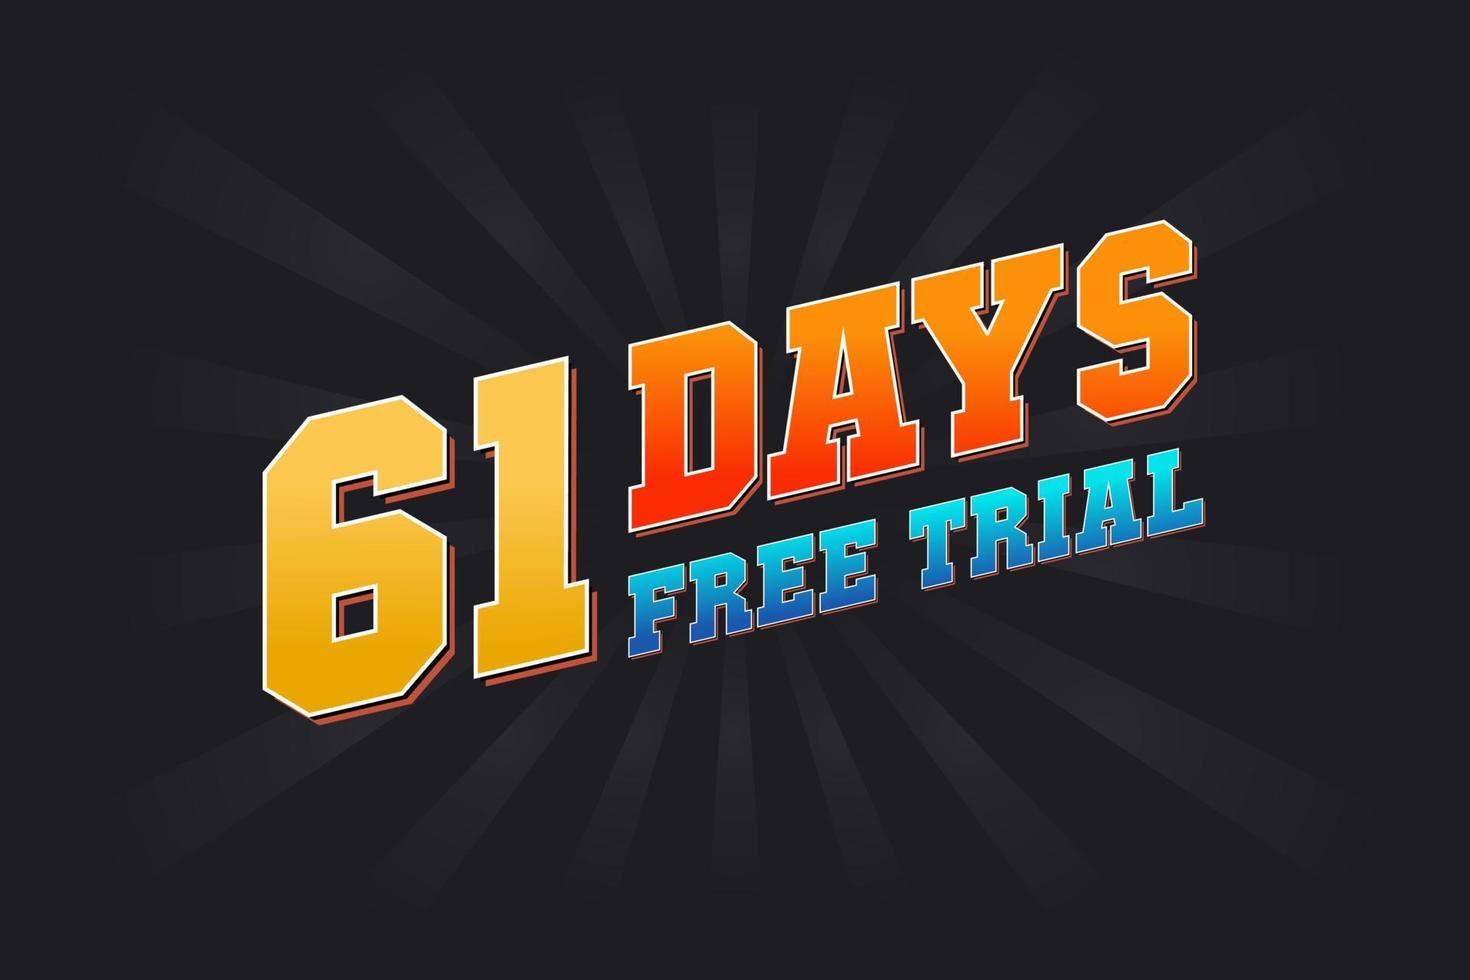 61 días de prueba gratuita vector de stock de texto en negrita promocional